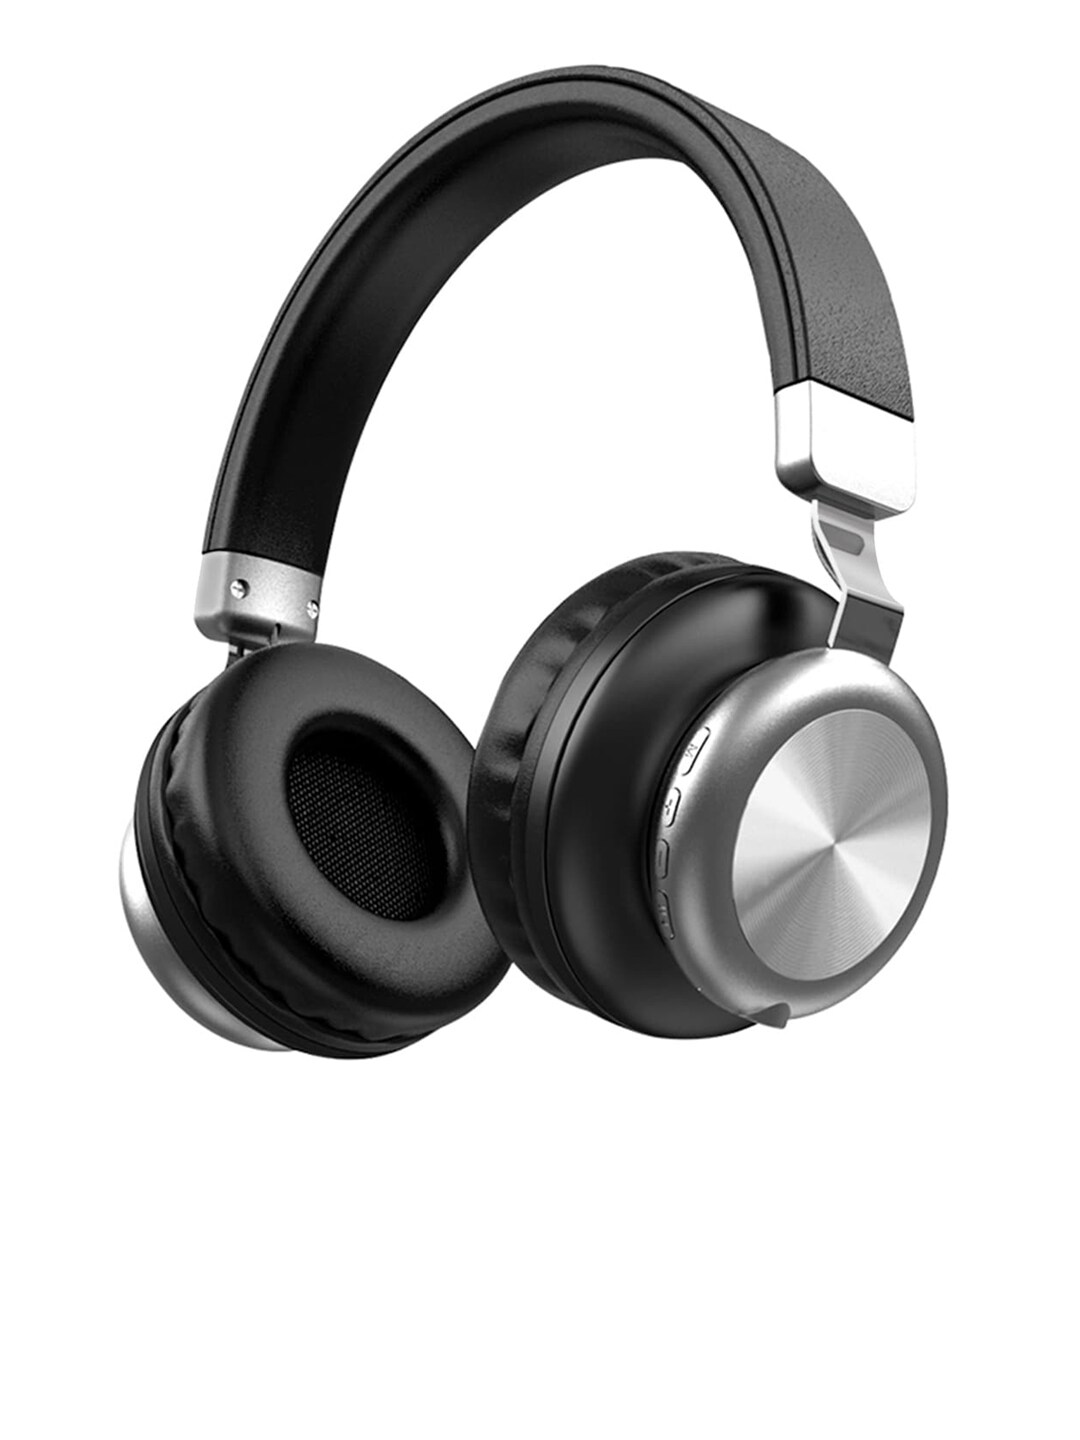 INONE Unisex Black Wireless High Bass 50 mm Dynamic Drivers Headphone Price in India